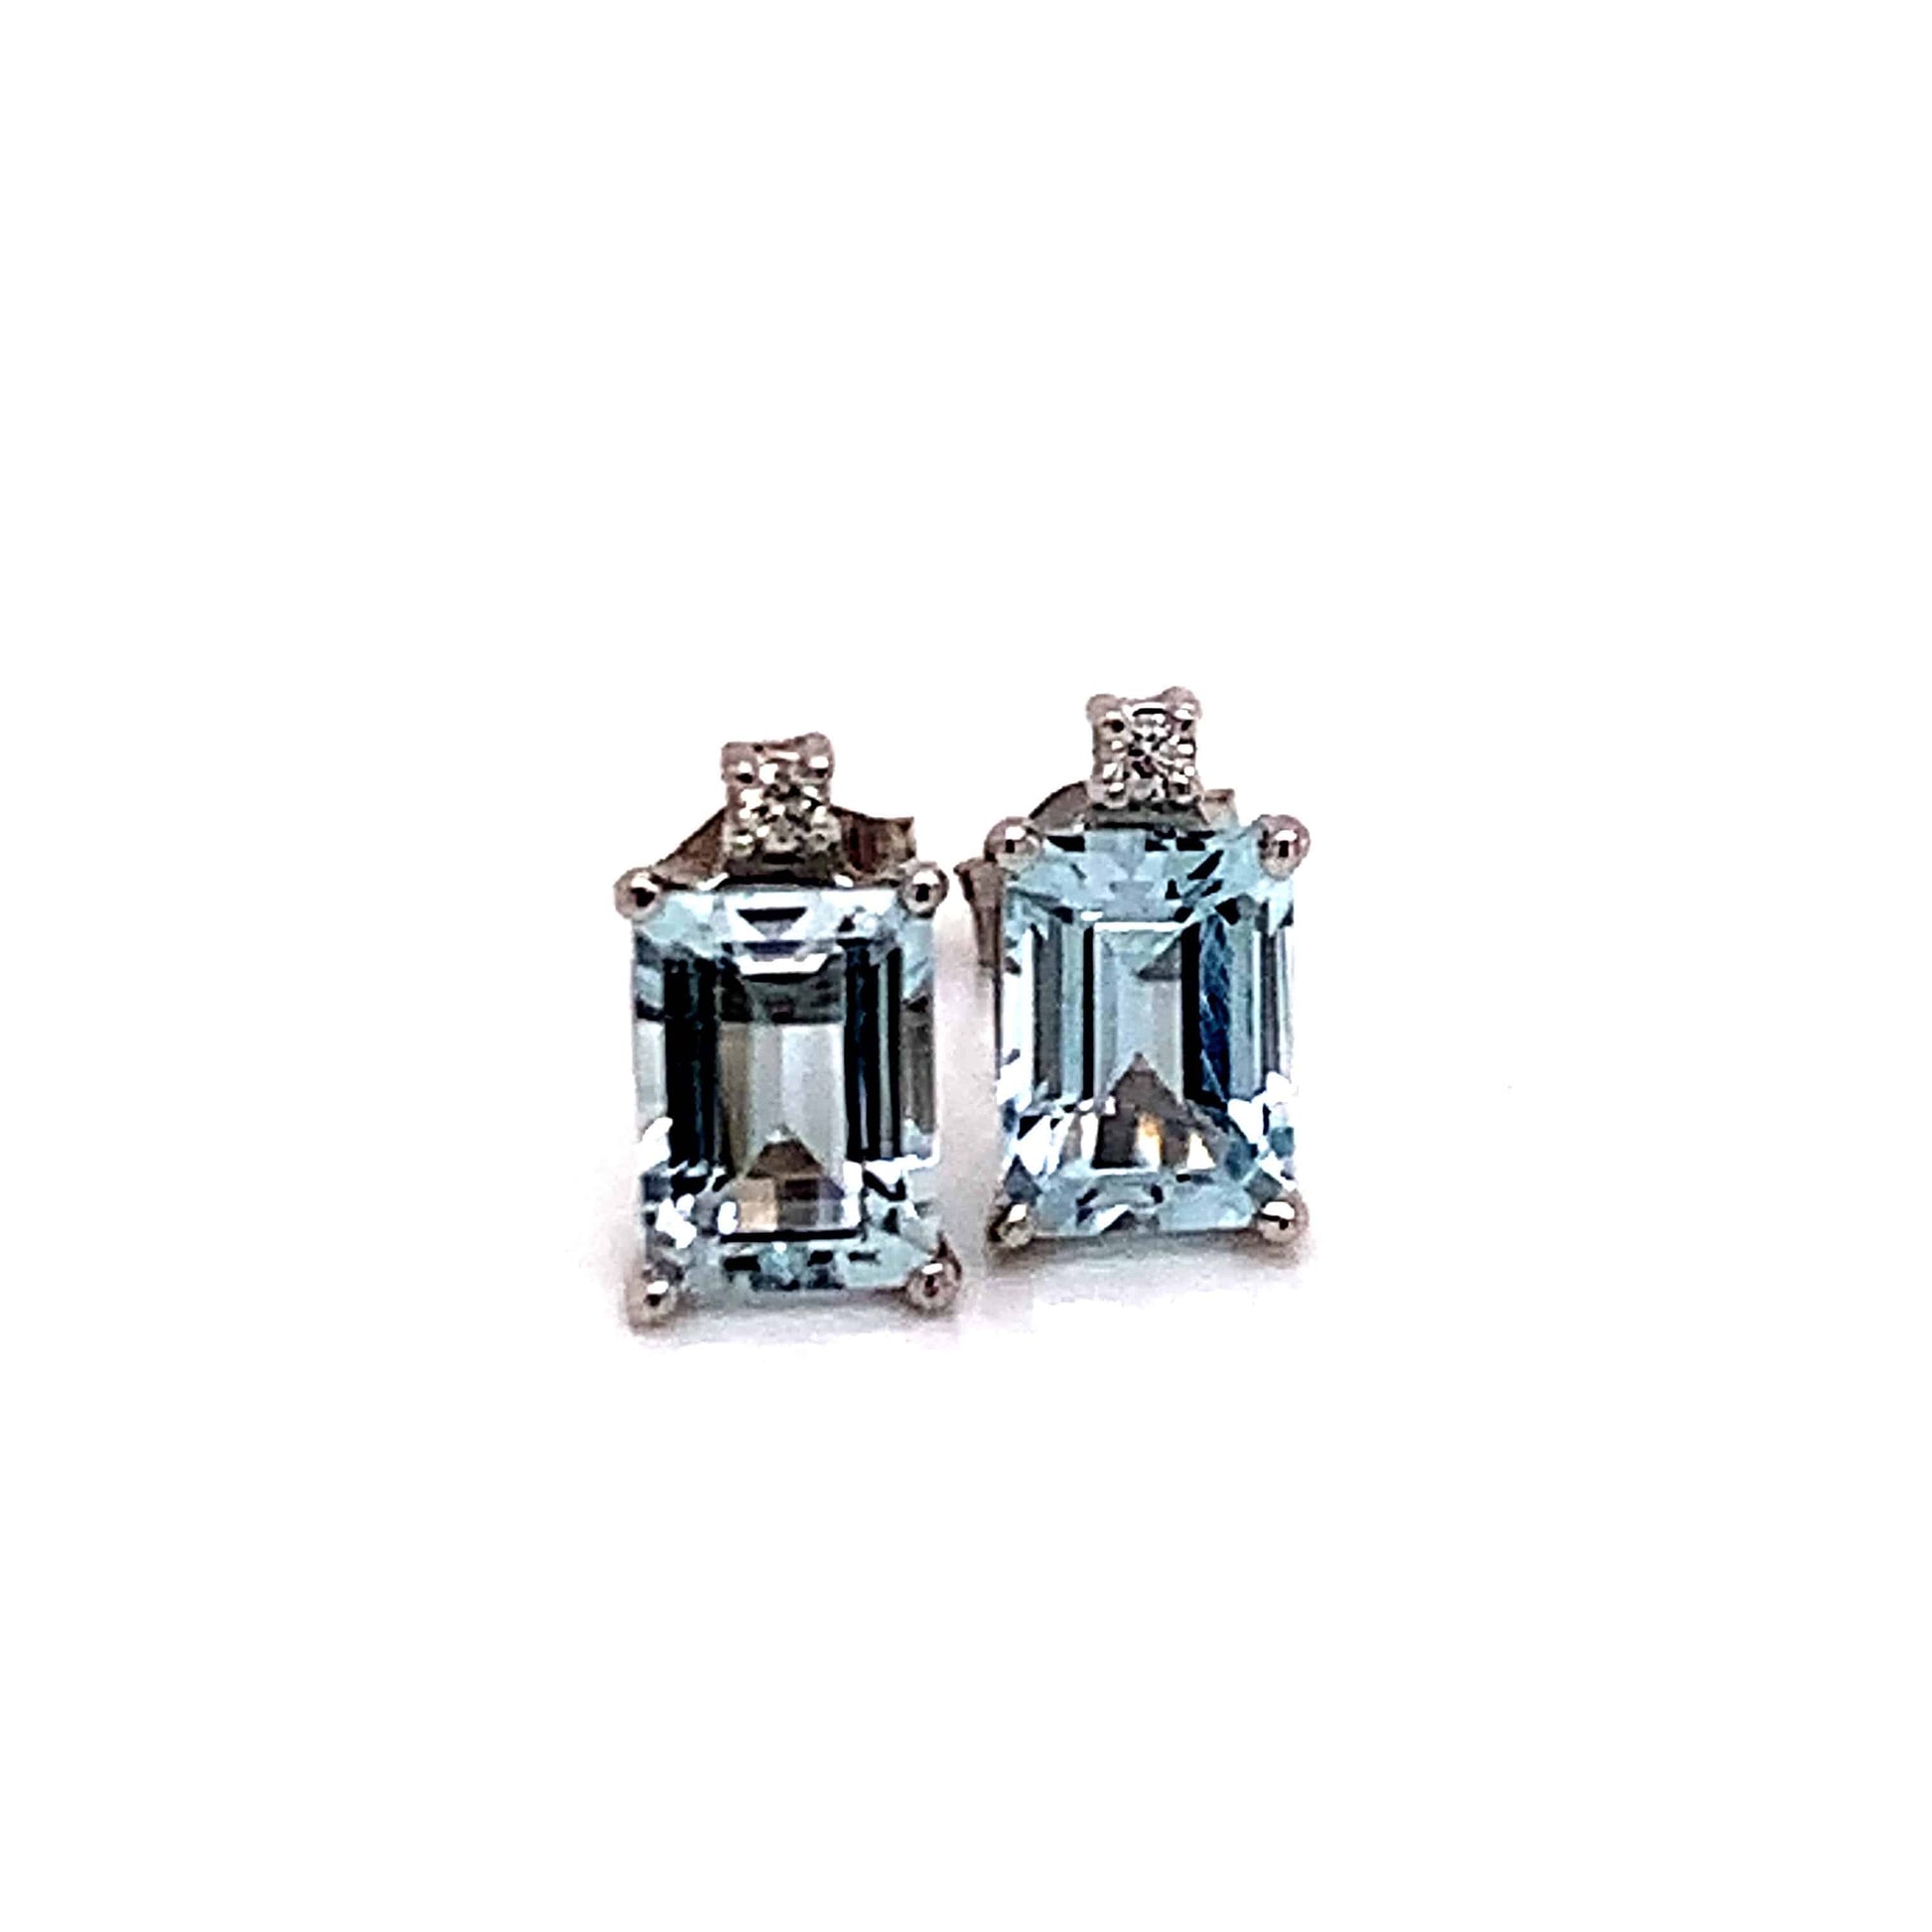 Natural Aquamarine Diamond Earrings 14k WG 1.84 TCW Certified $1,490 018716 - Certified Estate Jewelry